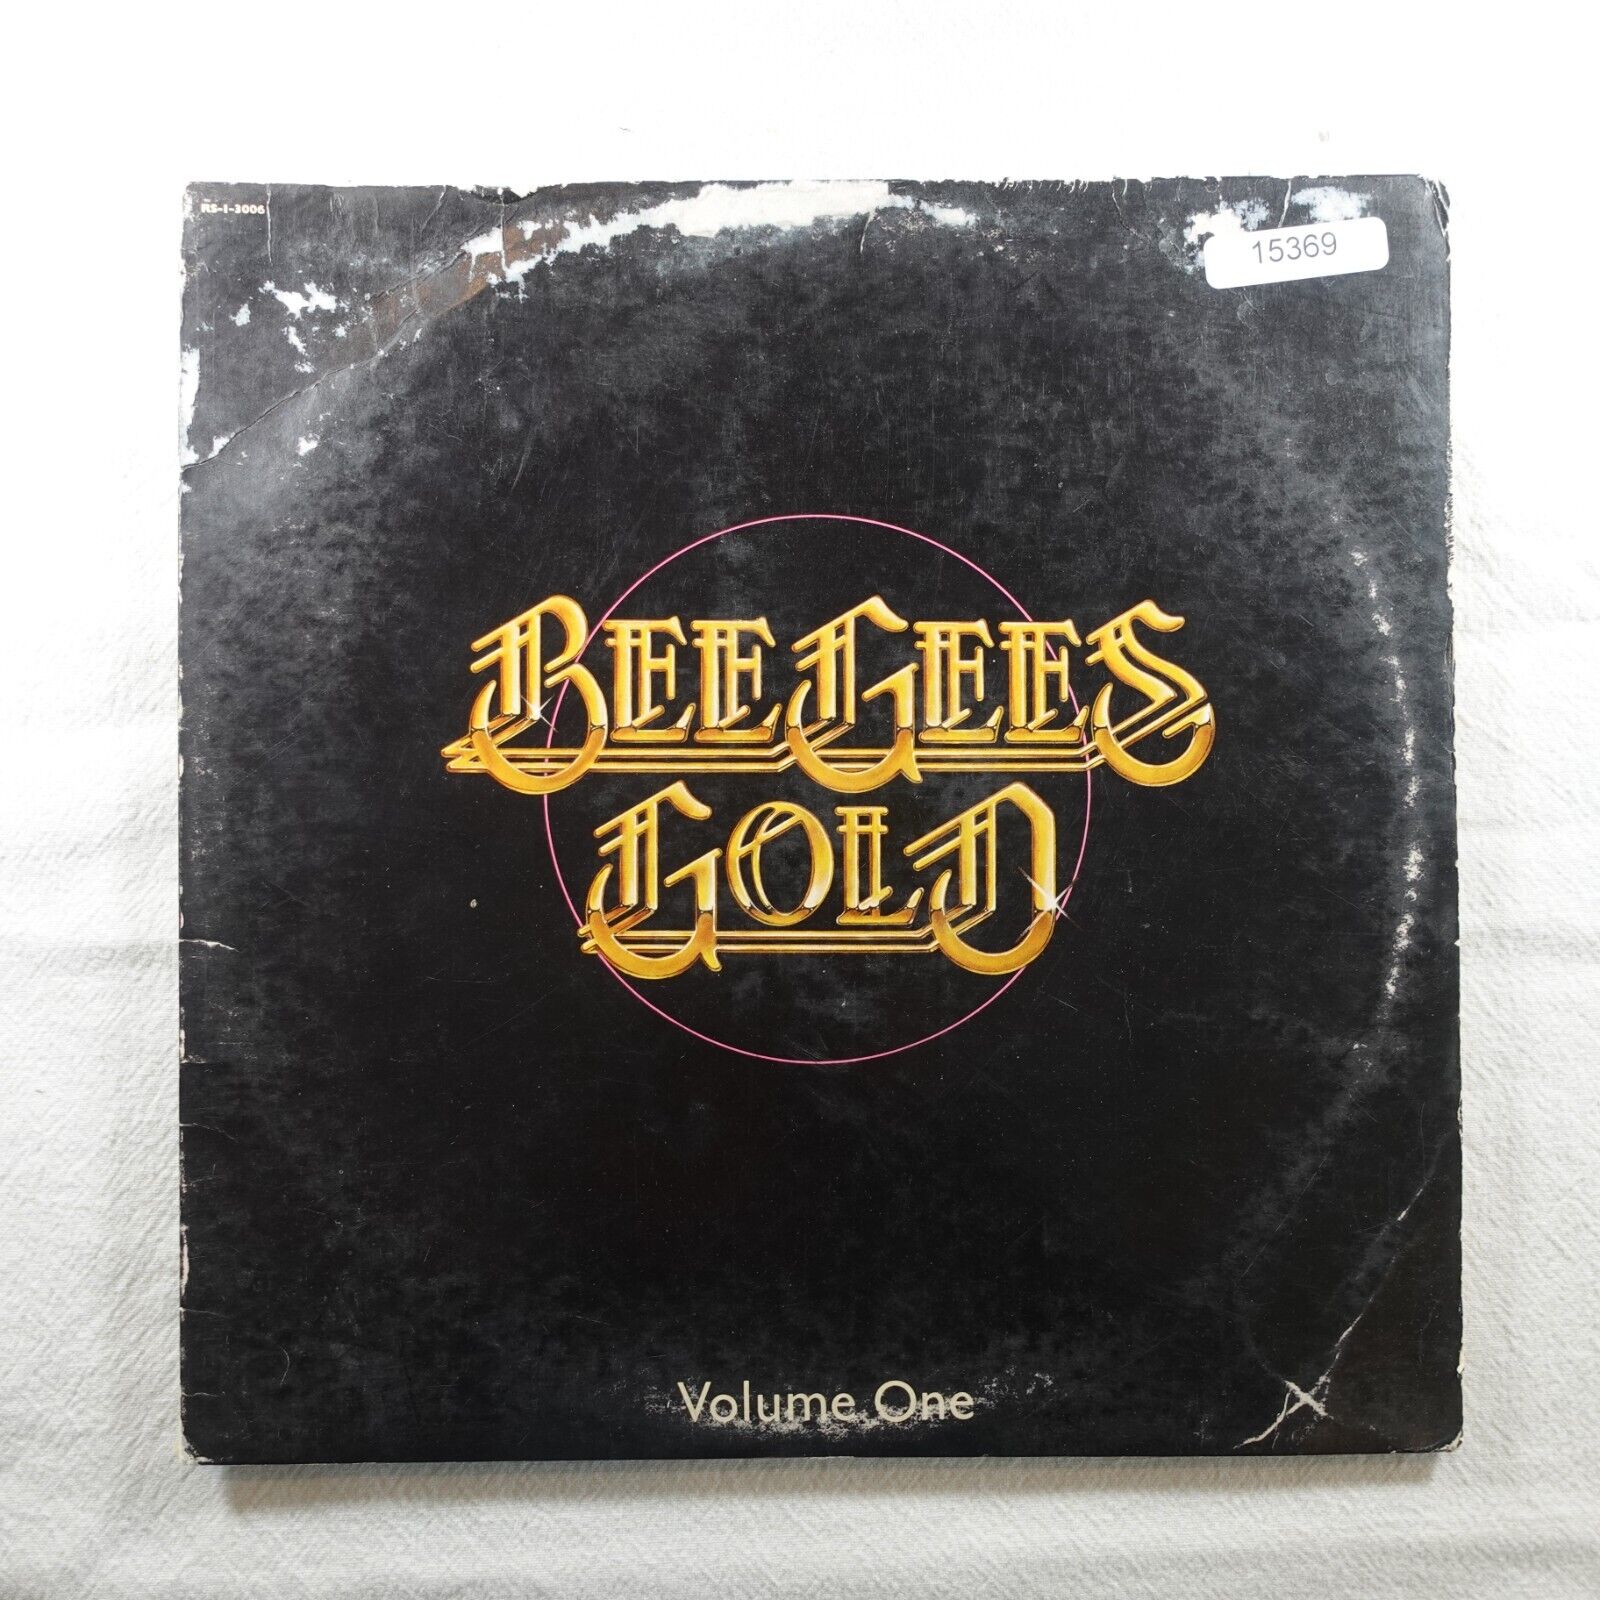 Bee Gees Gold   Record Album Vinyl LP